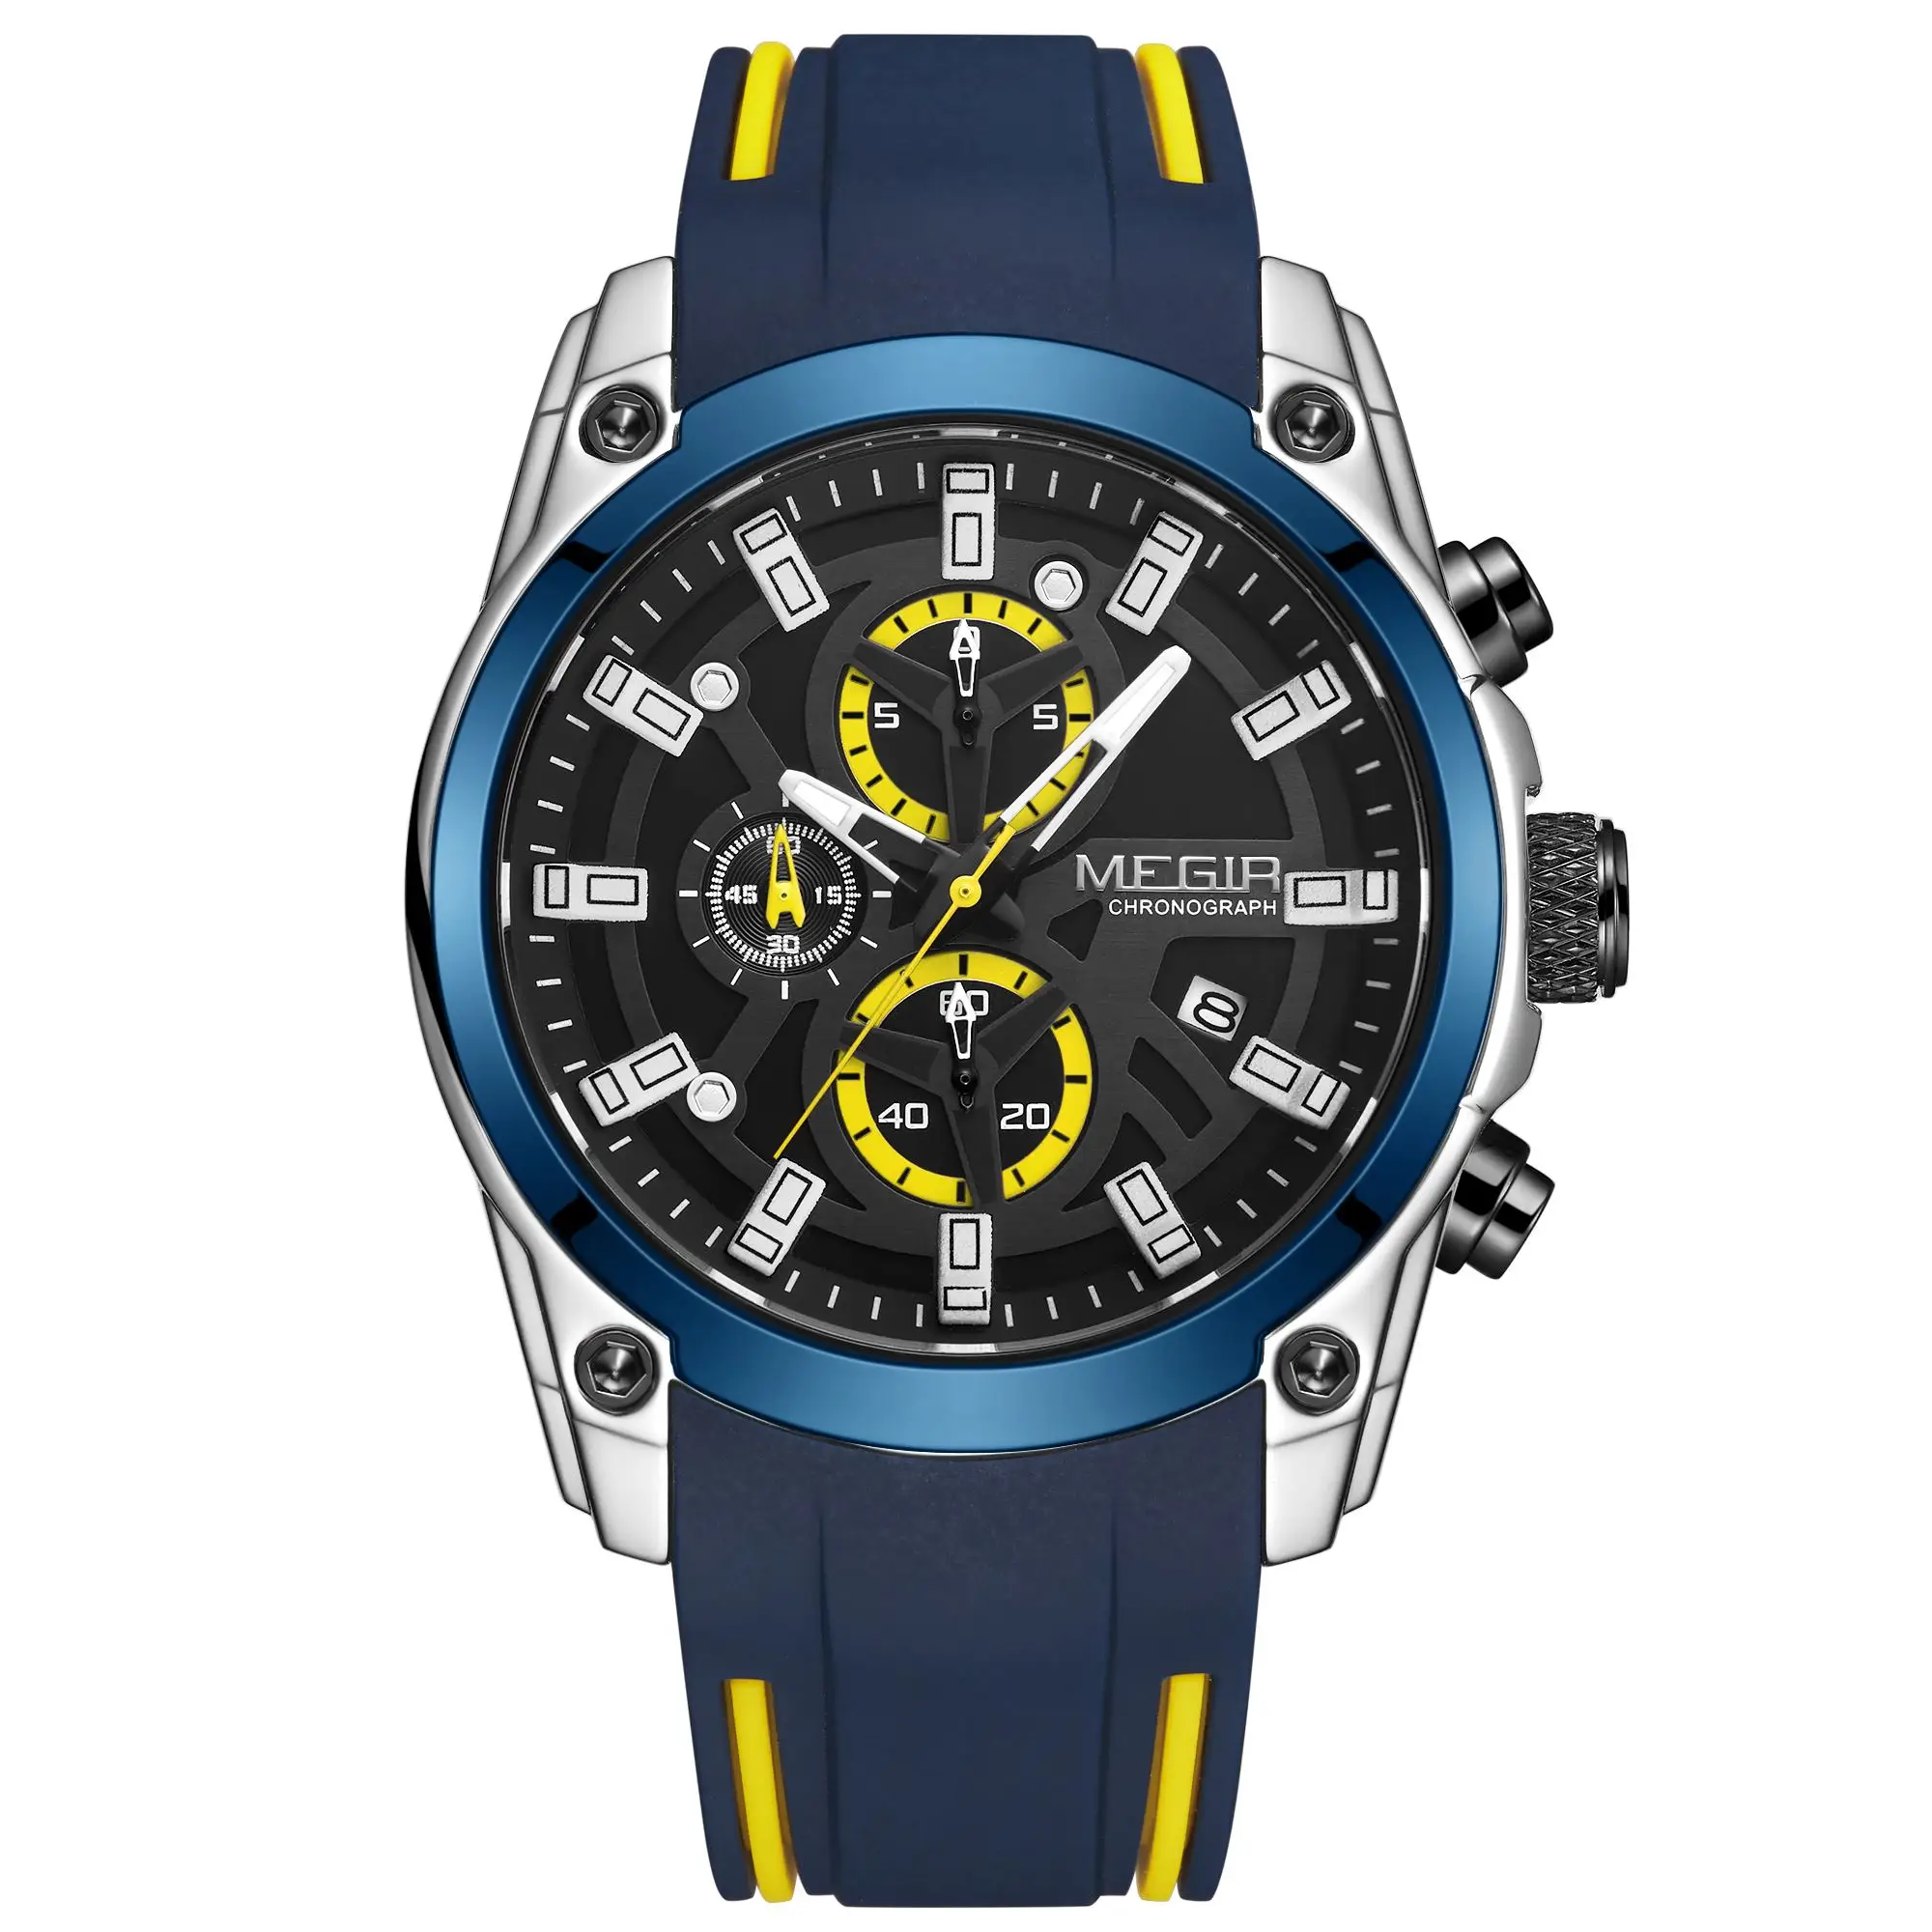 

Relojes Hombre MEGIR 2144 Original Brand Luxury Men Chronograph Wrist Watches Quartz Fashion Silicone Sport Watch Waterproof, Blue, red, black, silver, rose gold